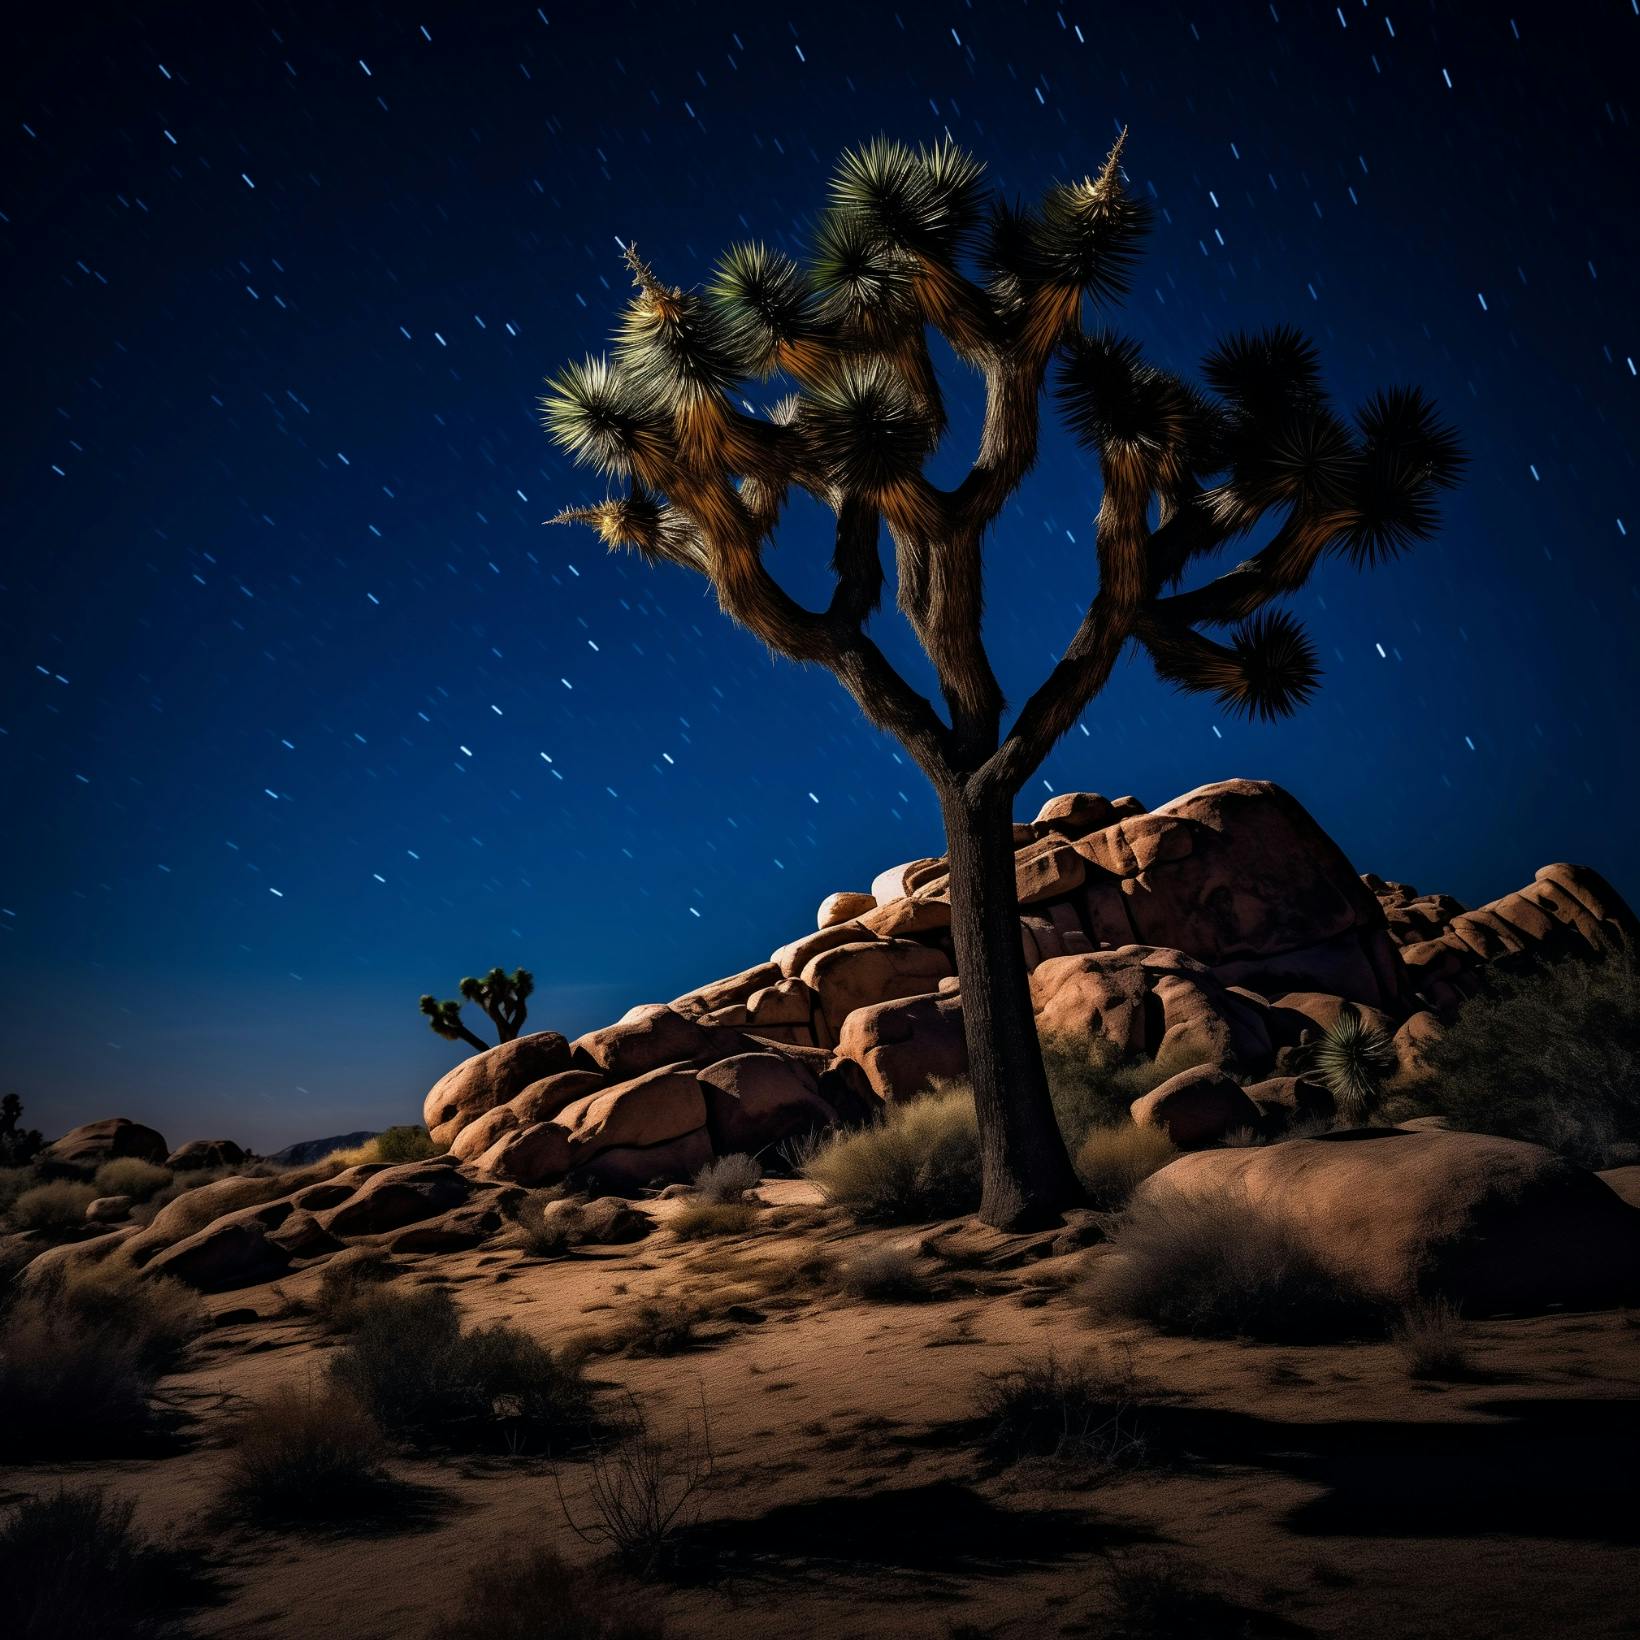 Joshua tree at night